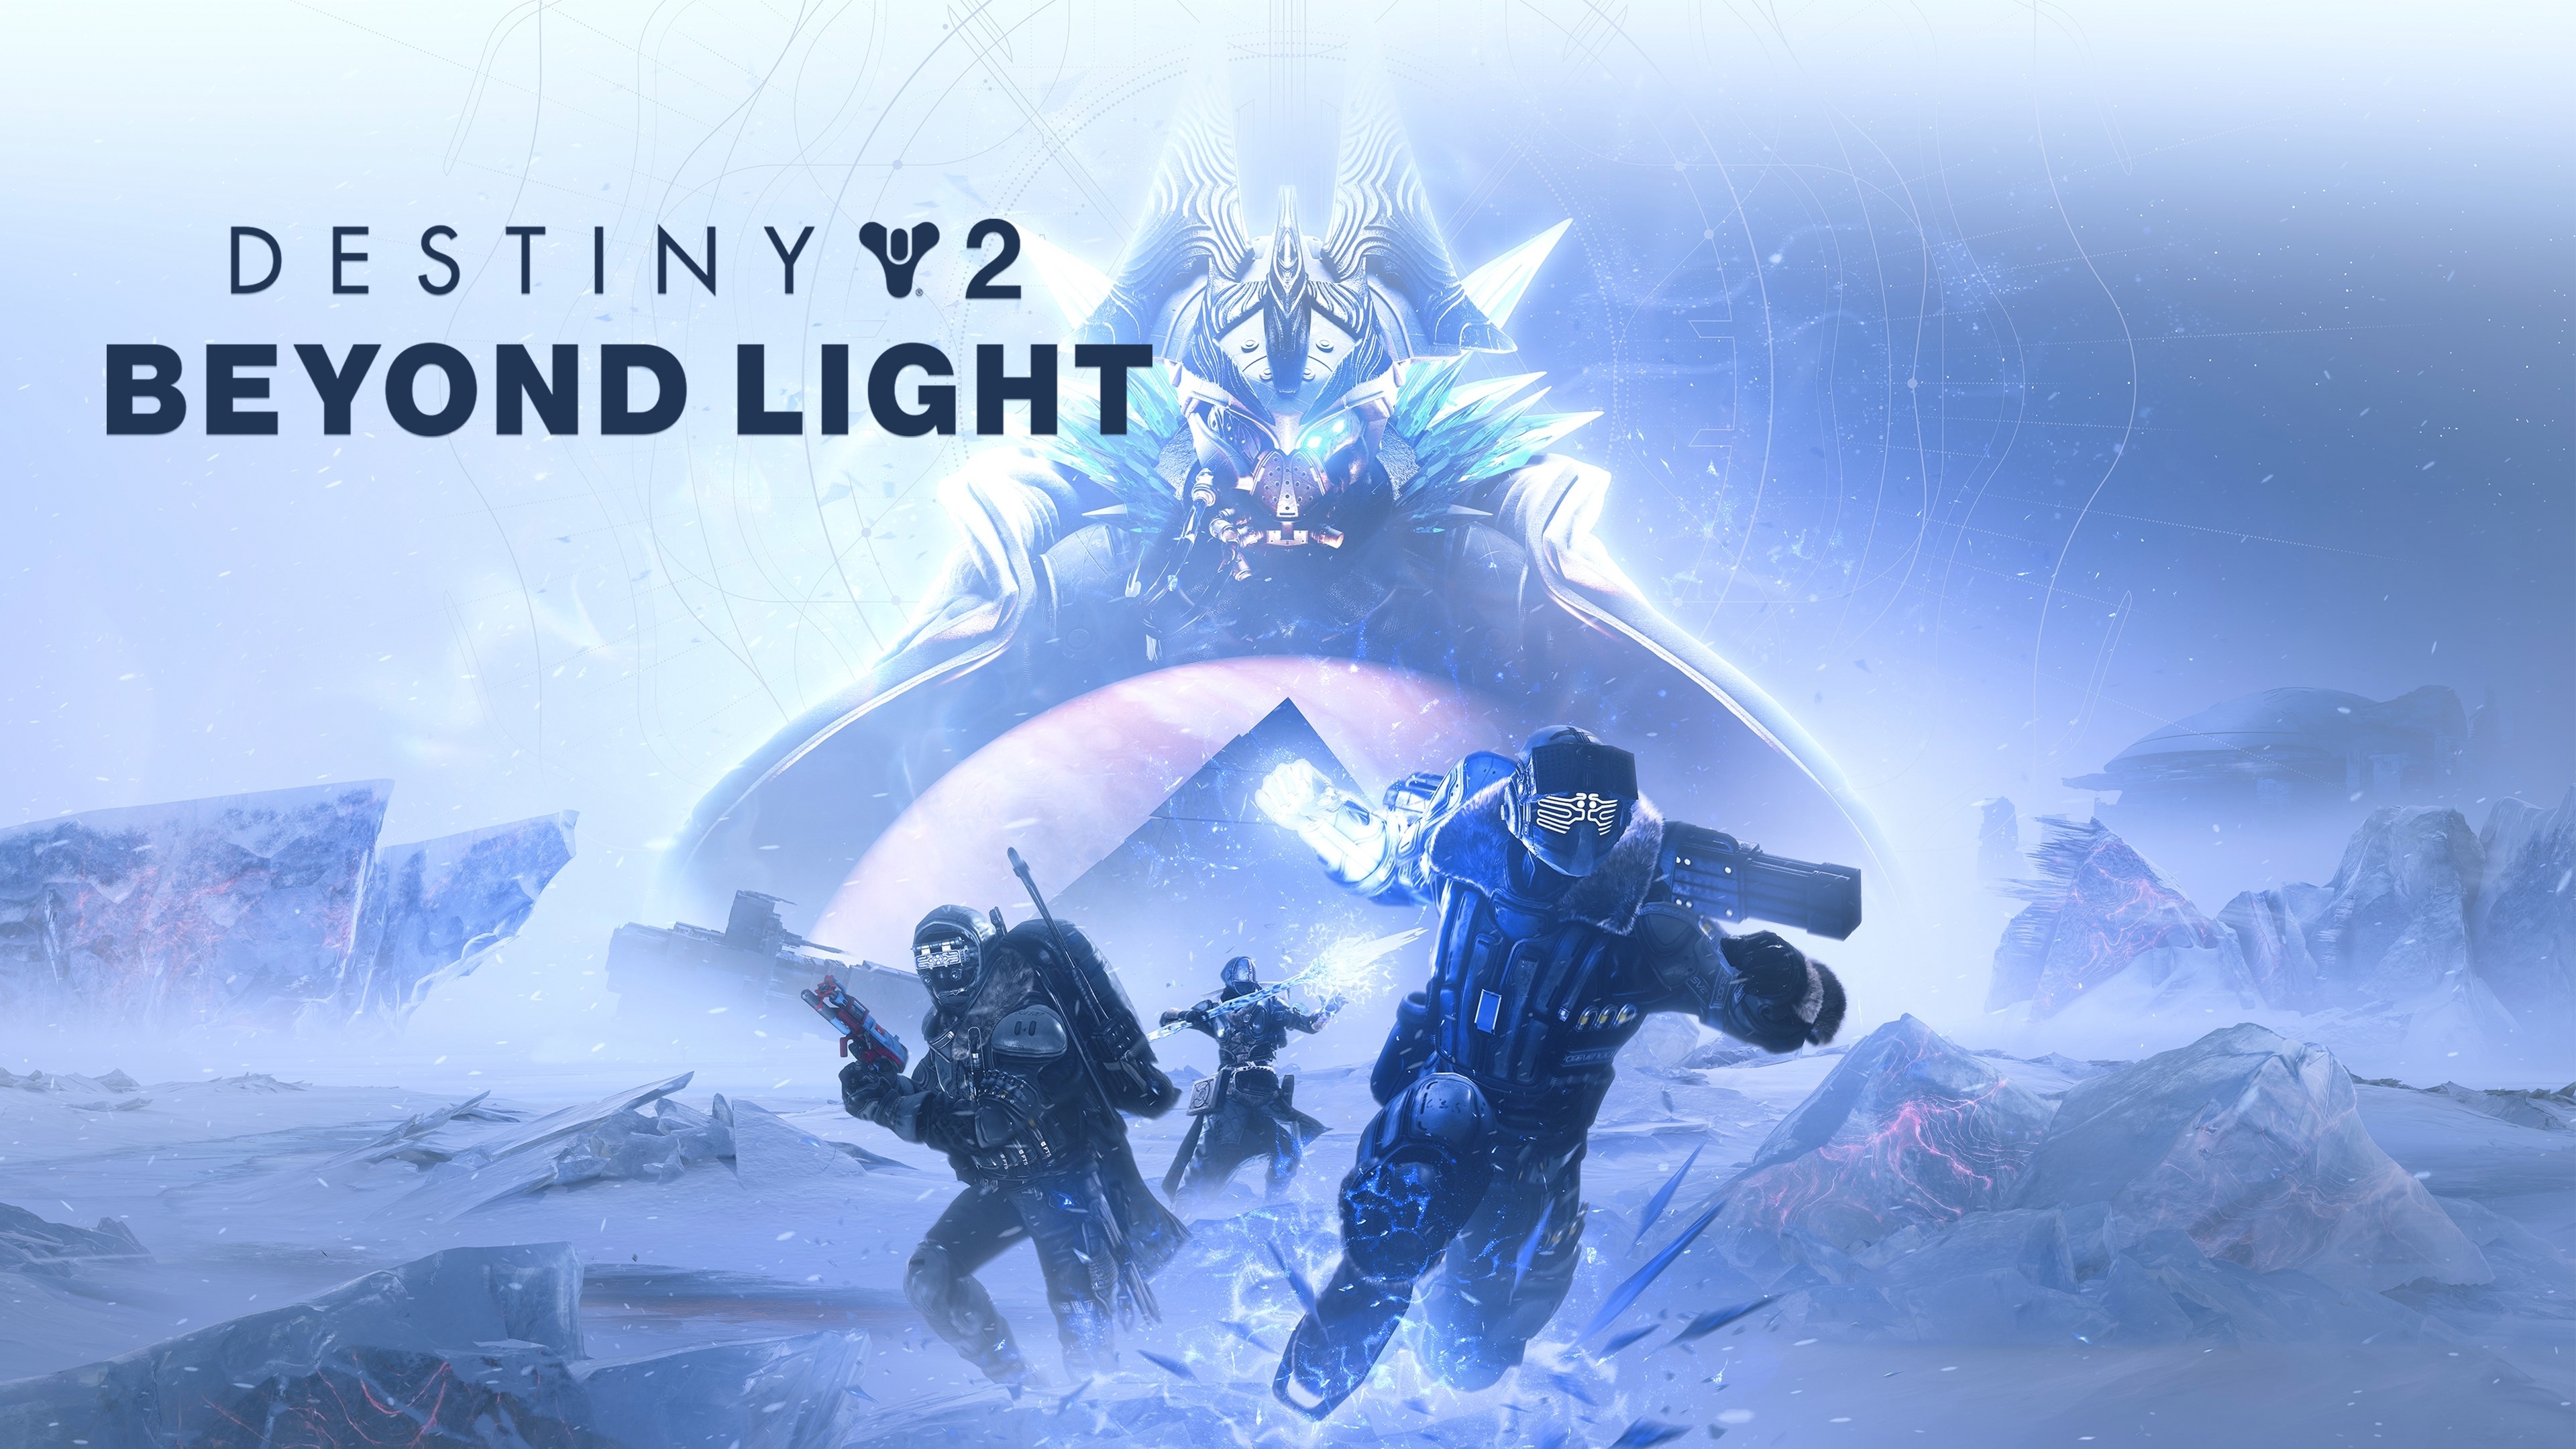 Destiny Buy 2: Steam Light Beyond